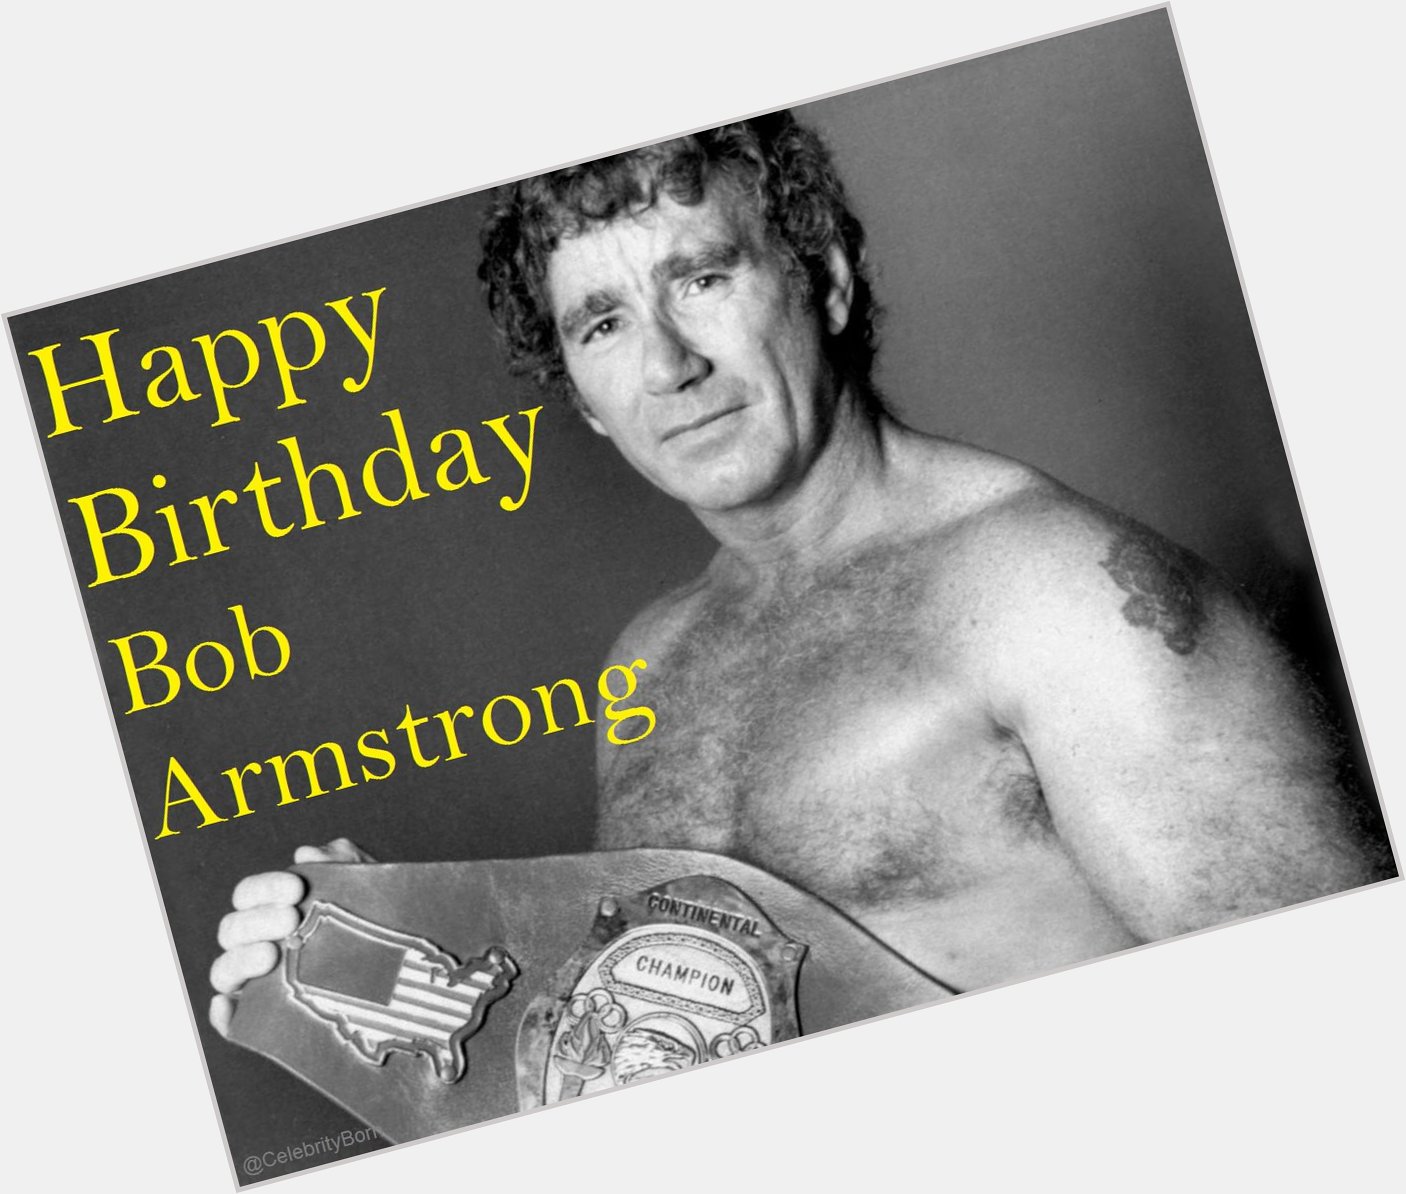 Happy birthday to Bob Armstrong (Wrestler) 